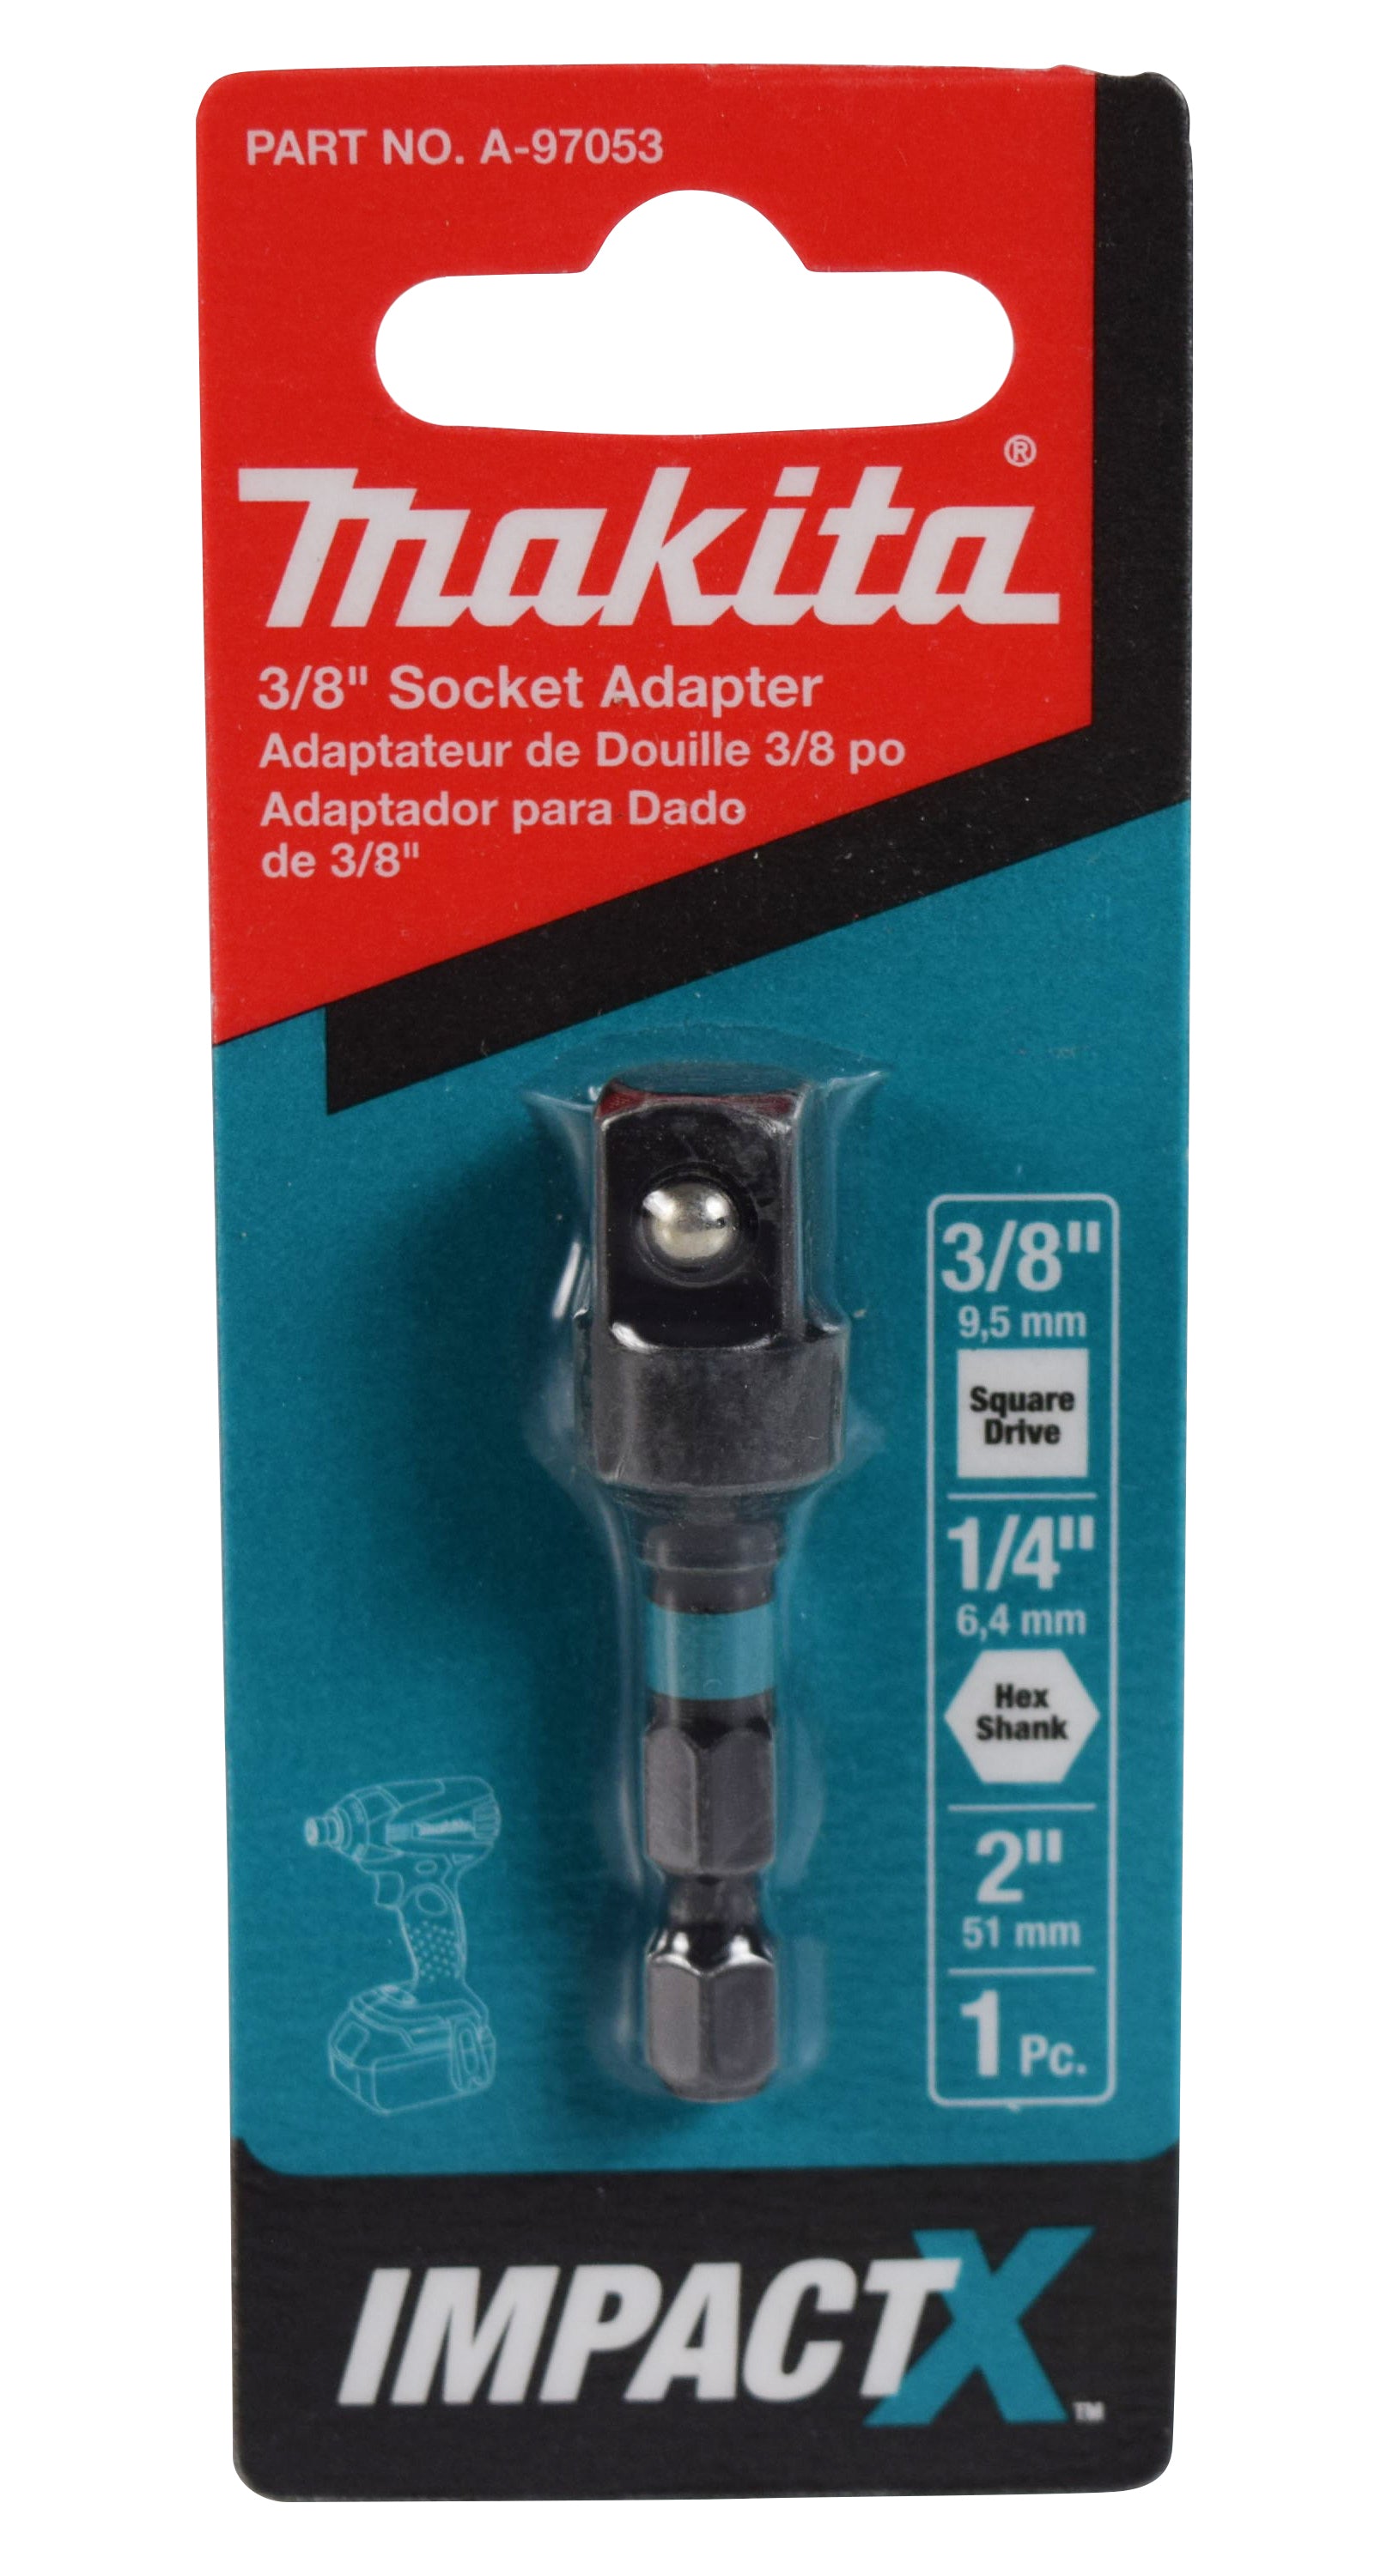 Makita A-97053 3/8-Inch x 2-Inch ImpactX Retention Ball Socket Adapter